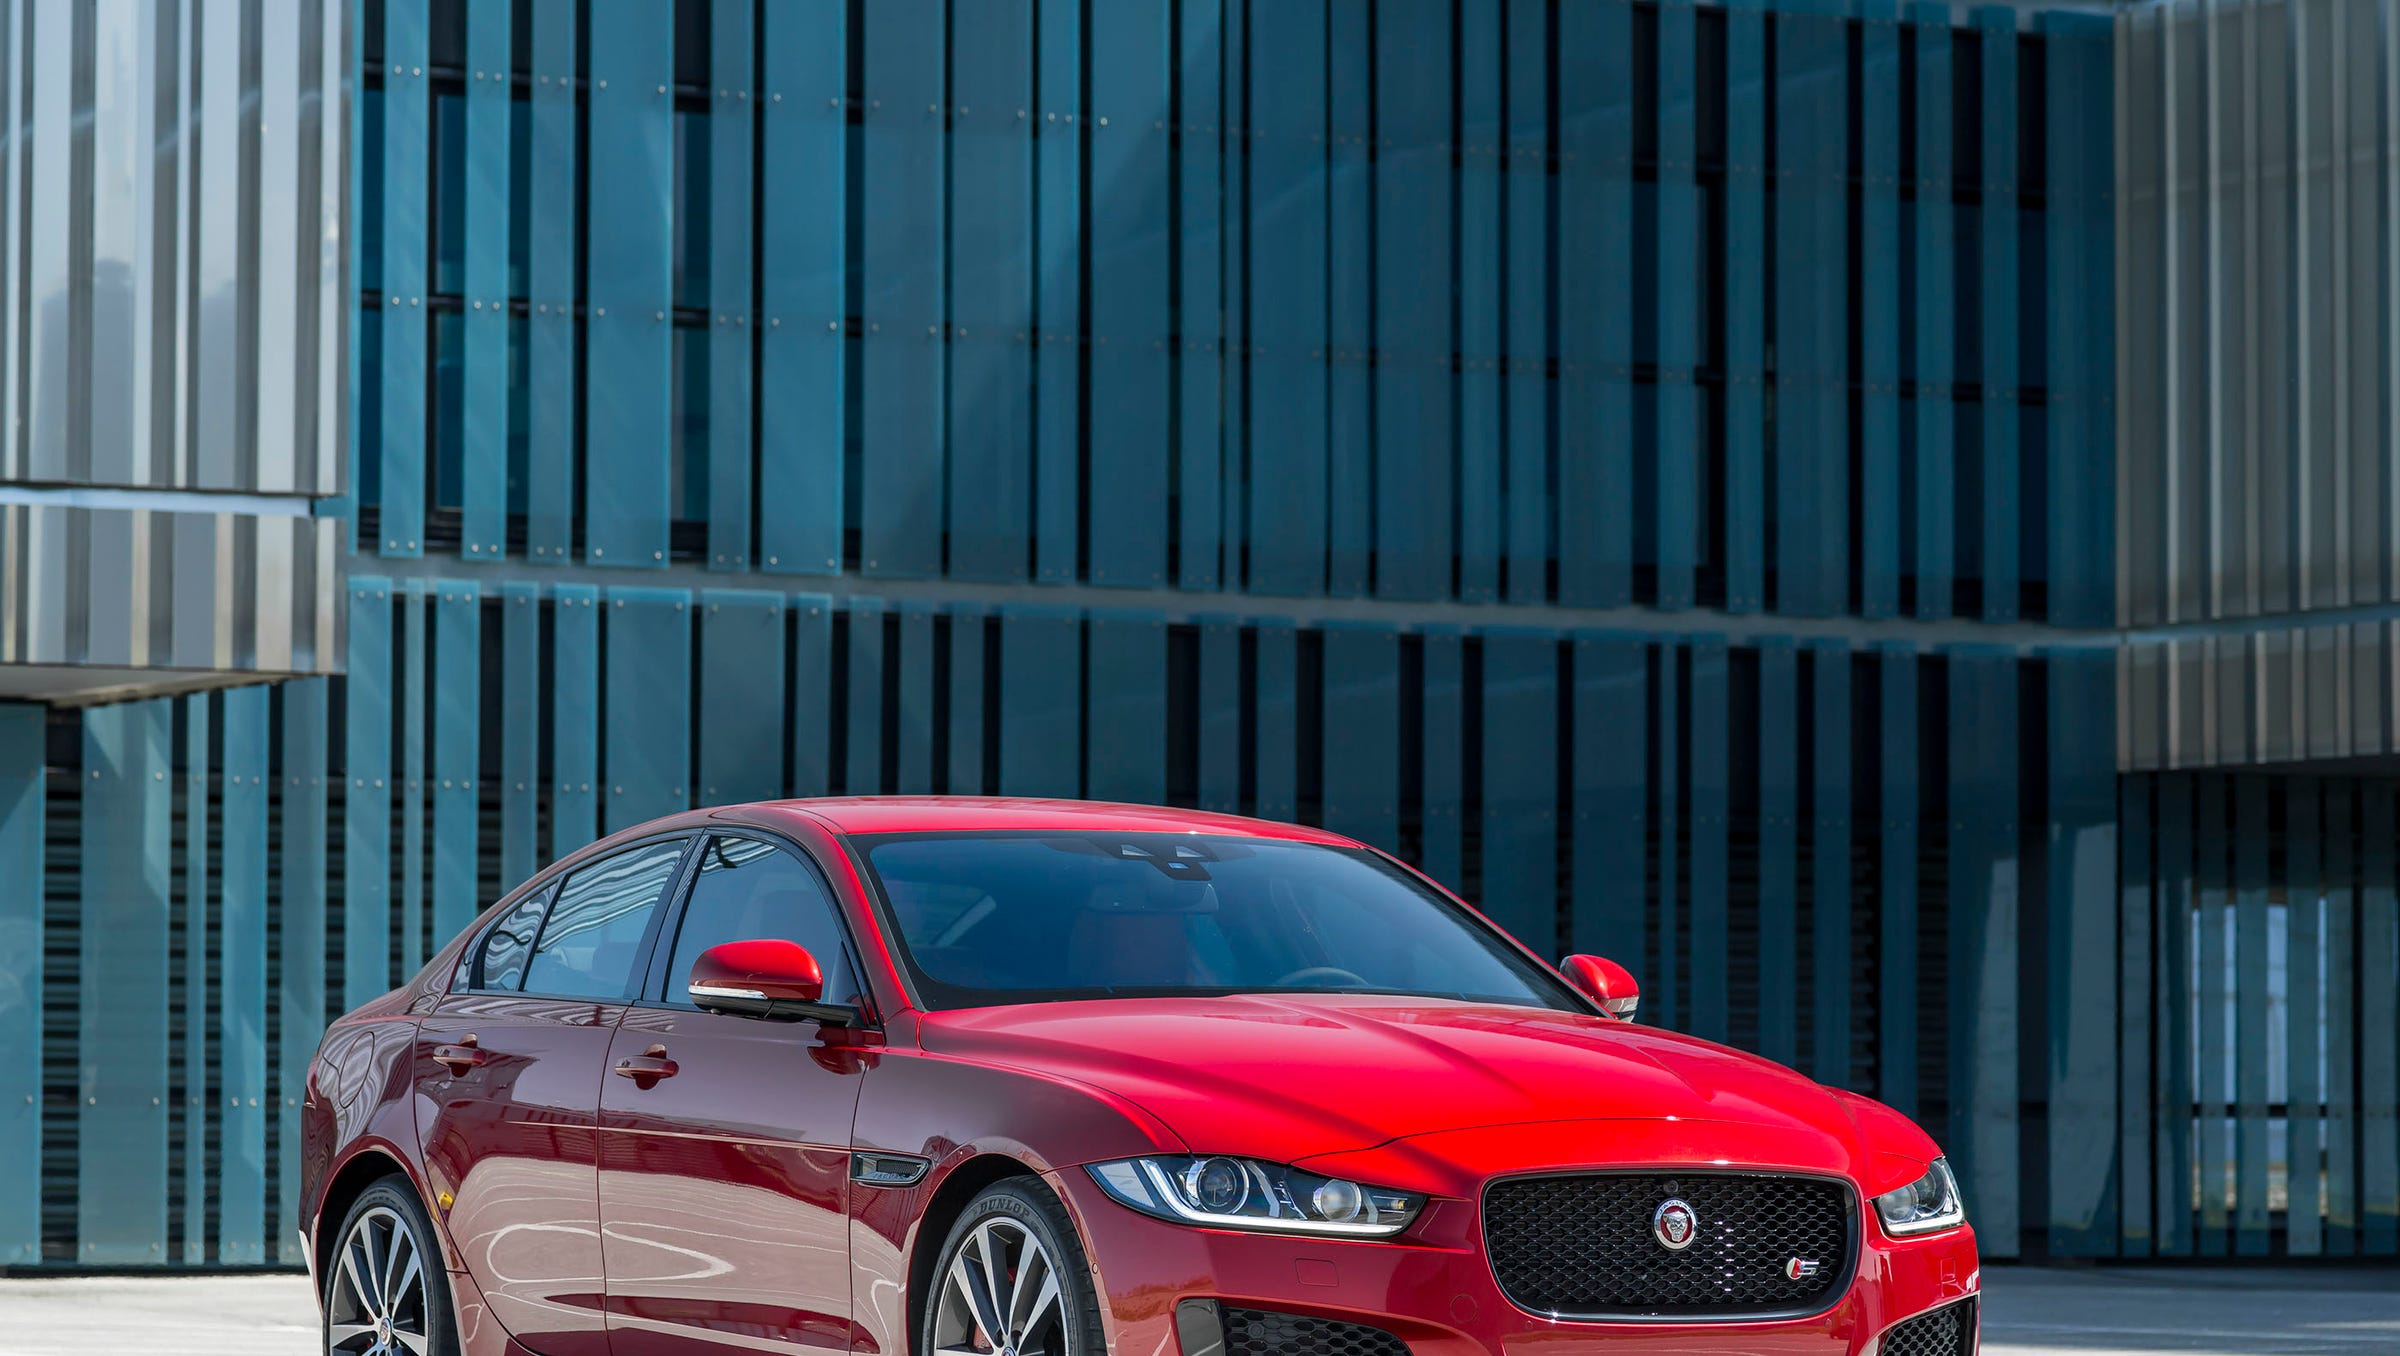 Seizoen elke dag Zelfrespect Jaguar has new vehicles, lower prices, free maintenance